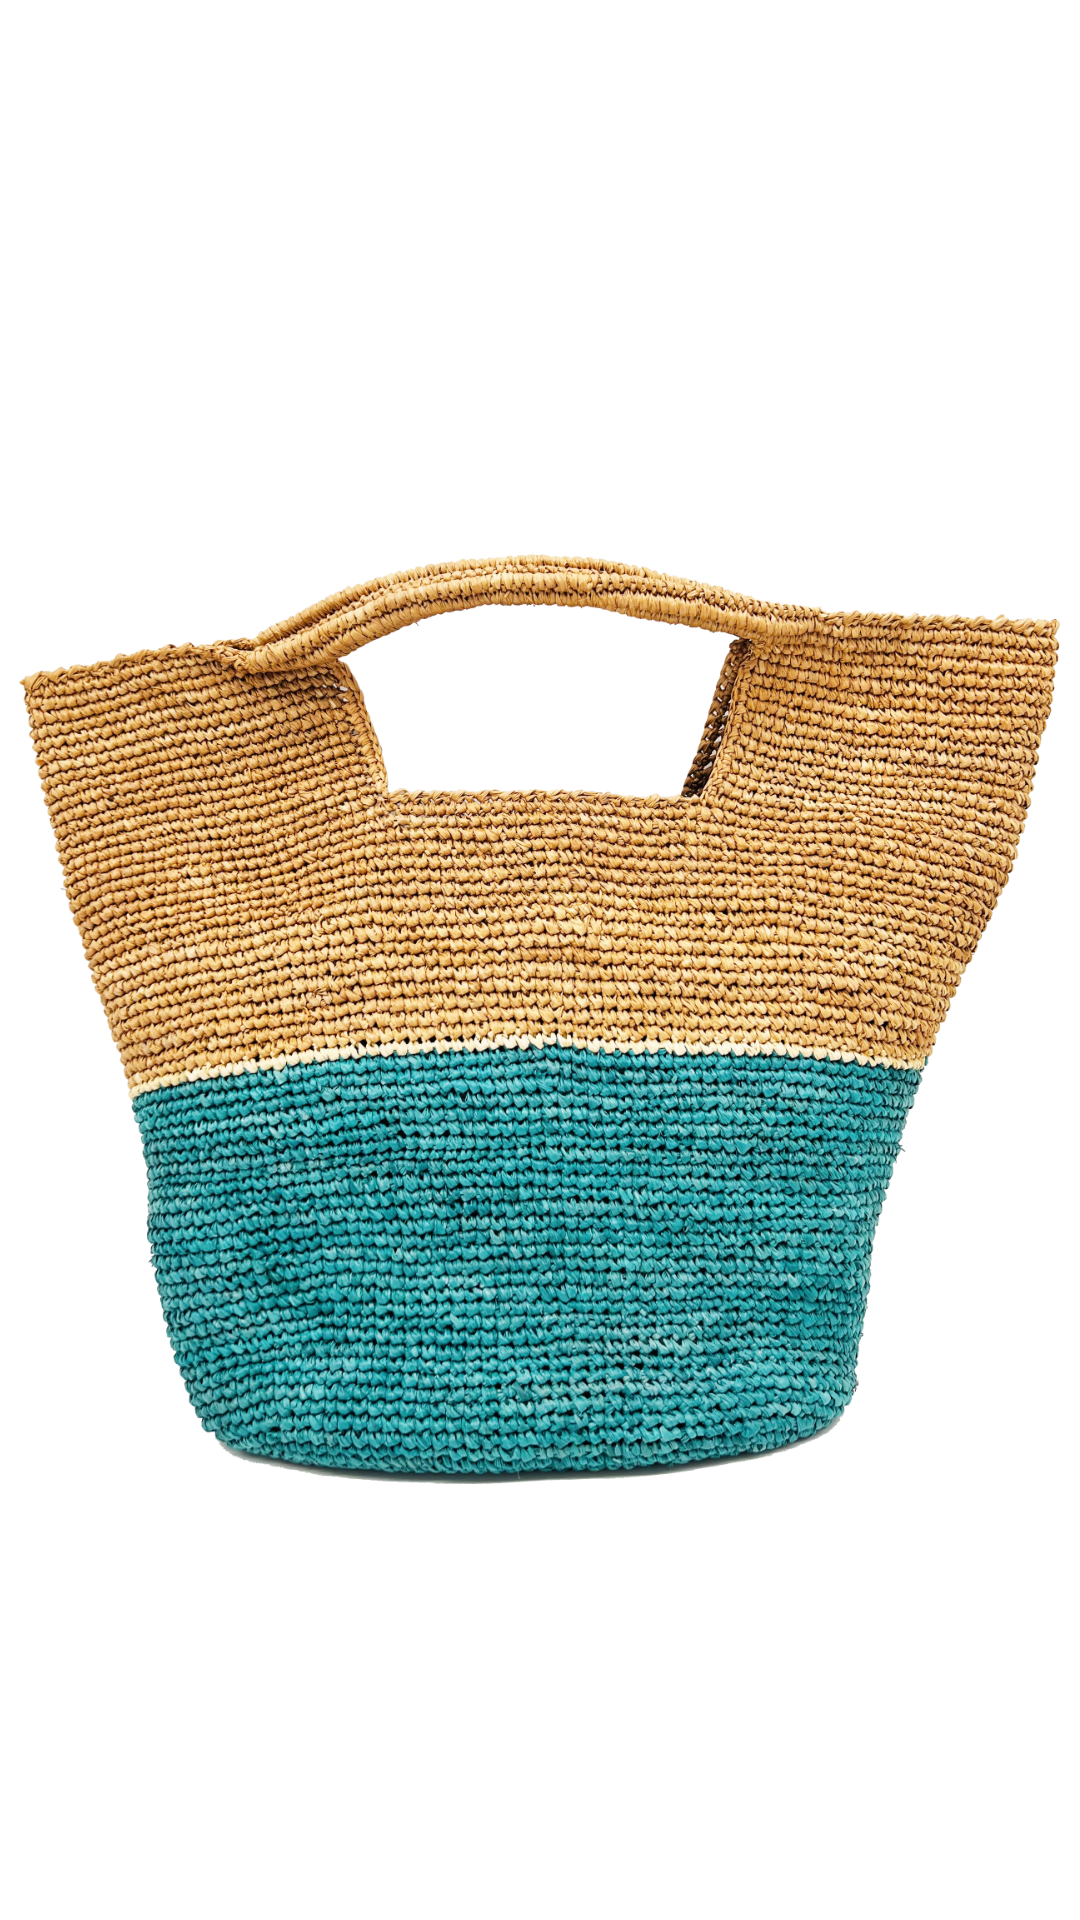 ConCon Two Tone Crochet Straw Bag